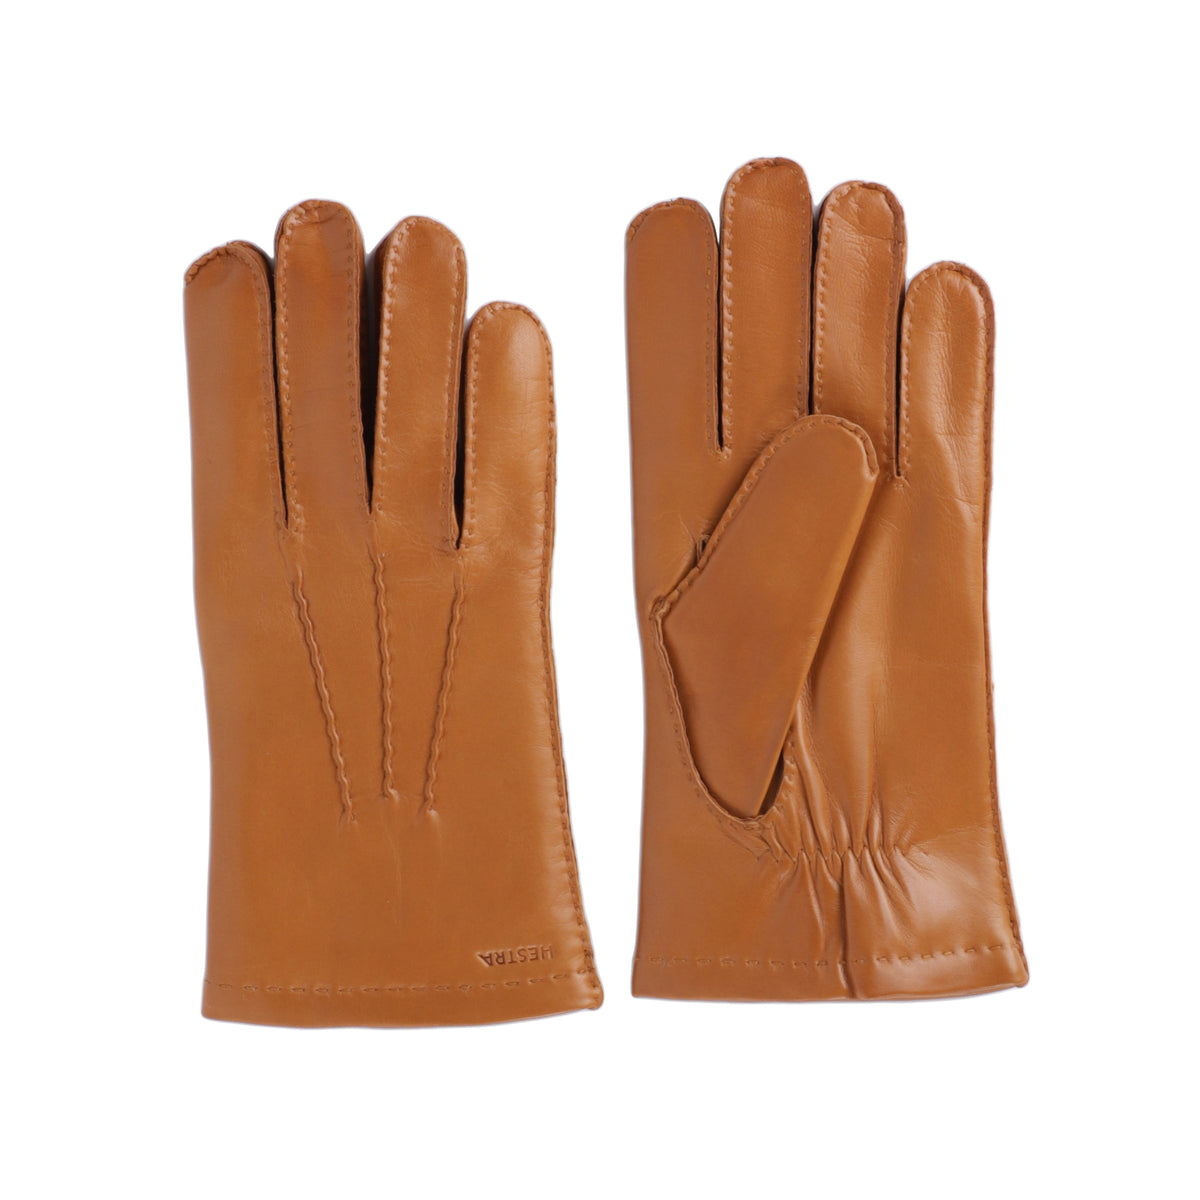 shop hestra gloves online brown cork leather winter